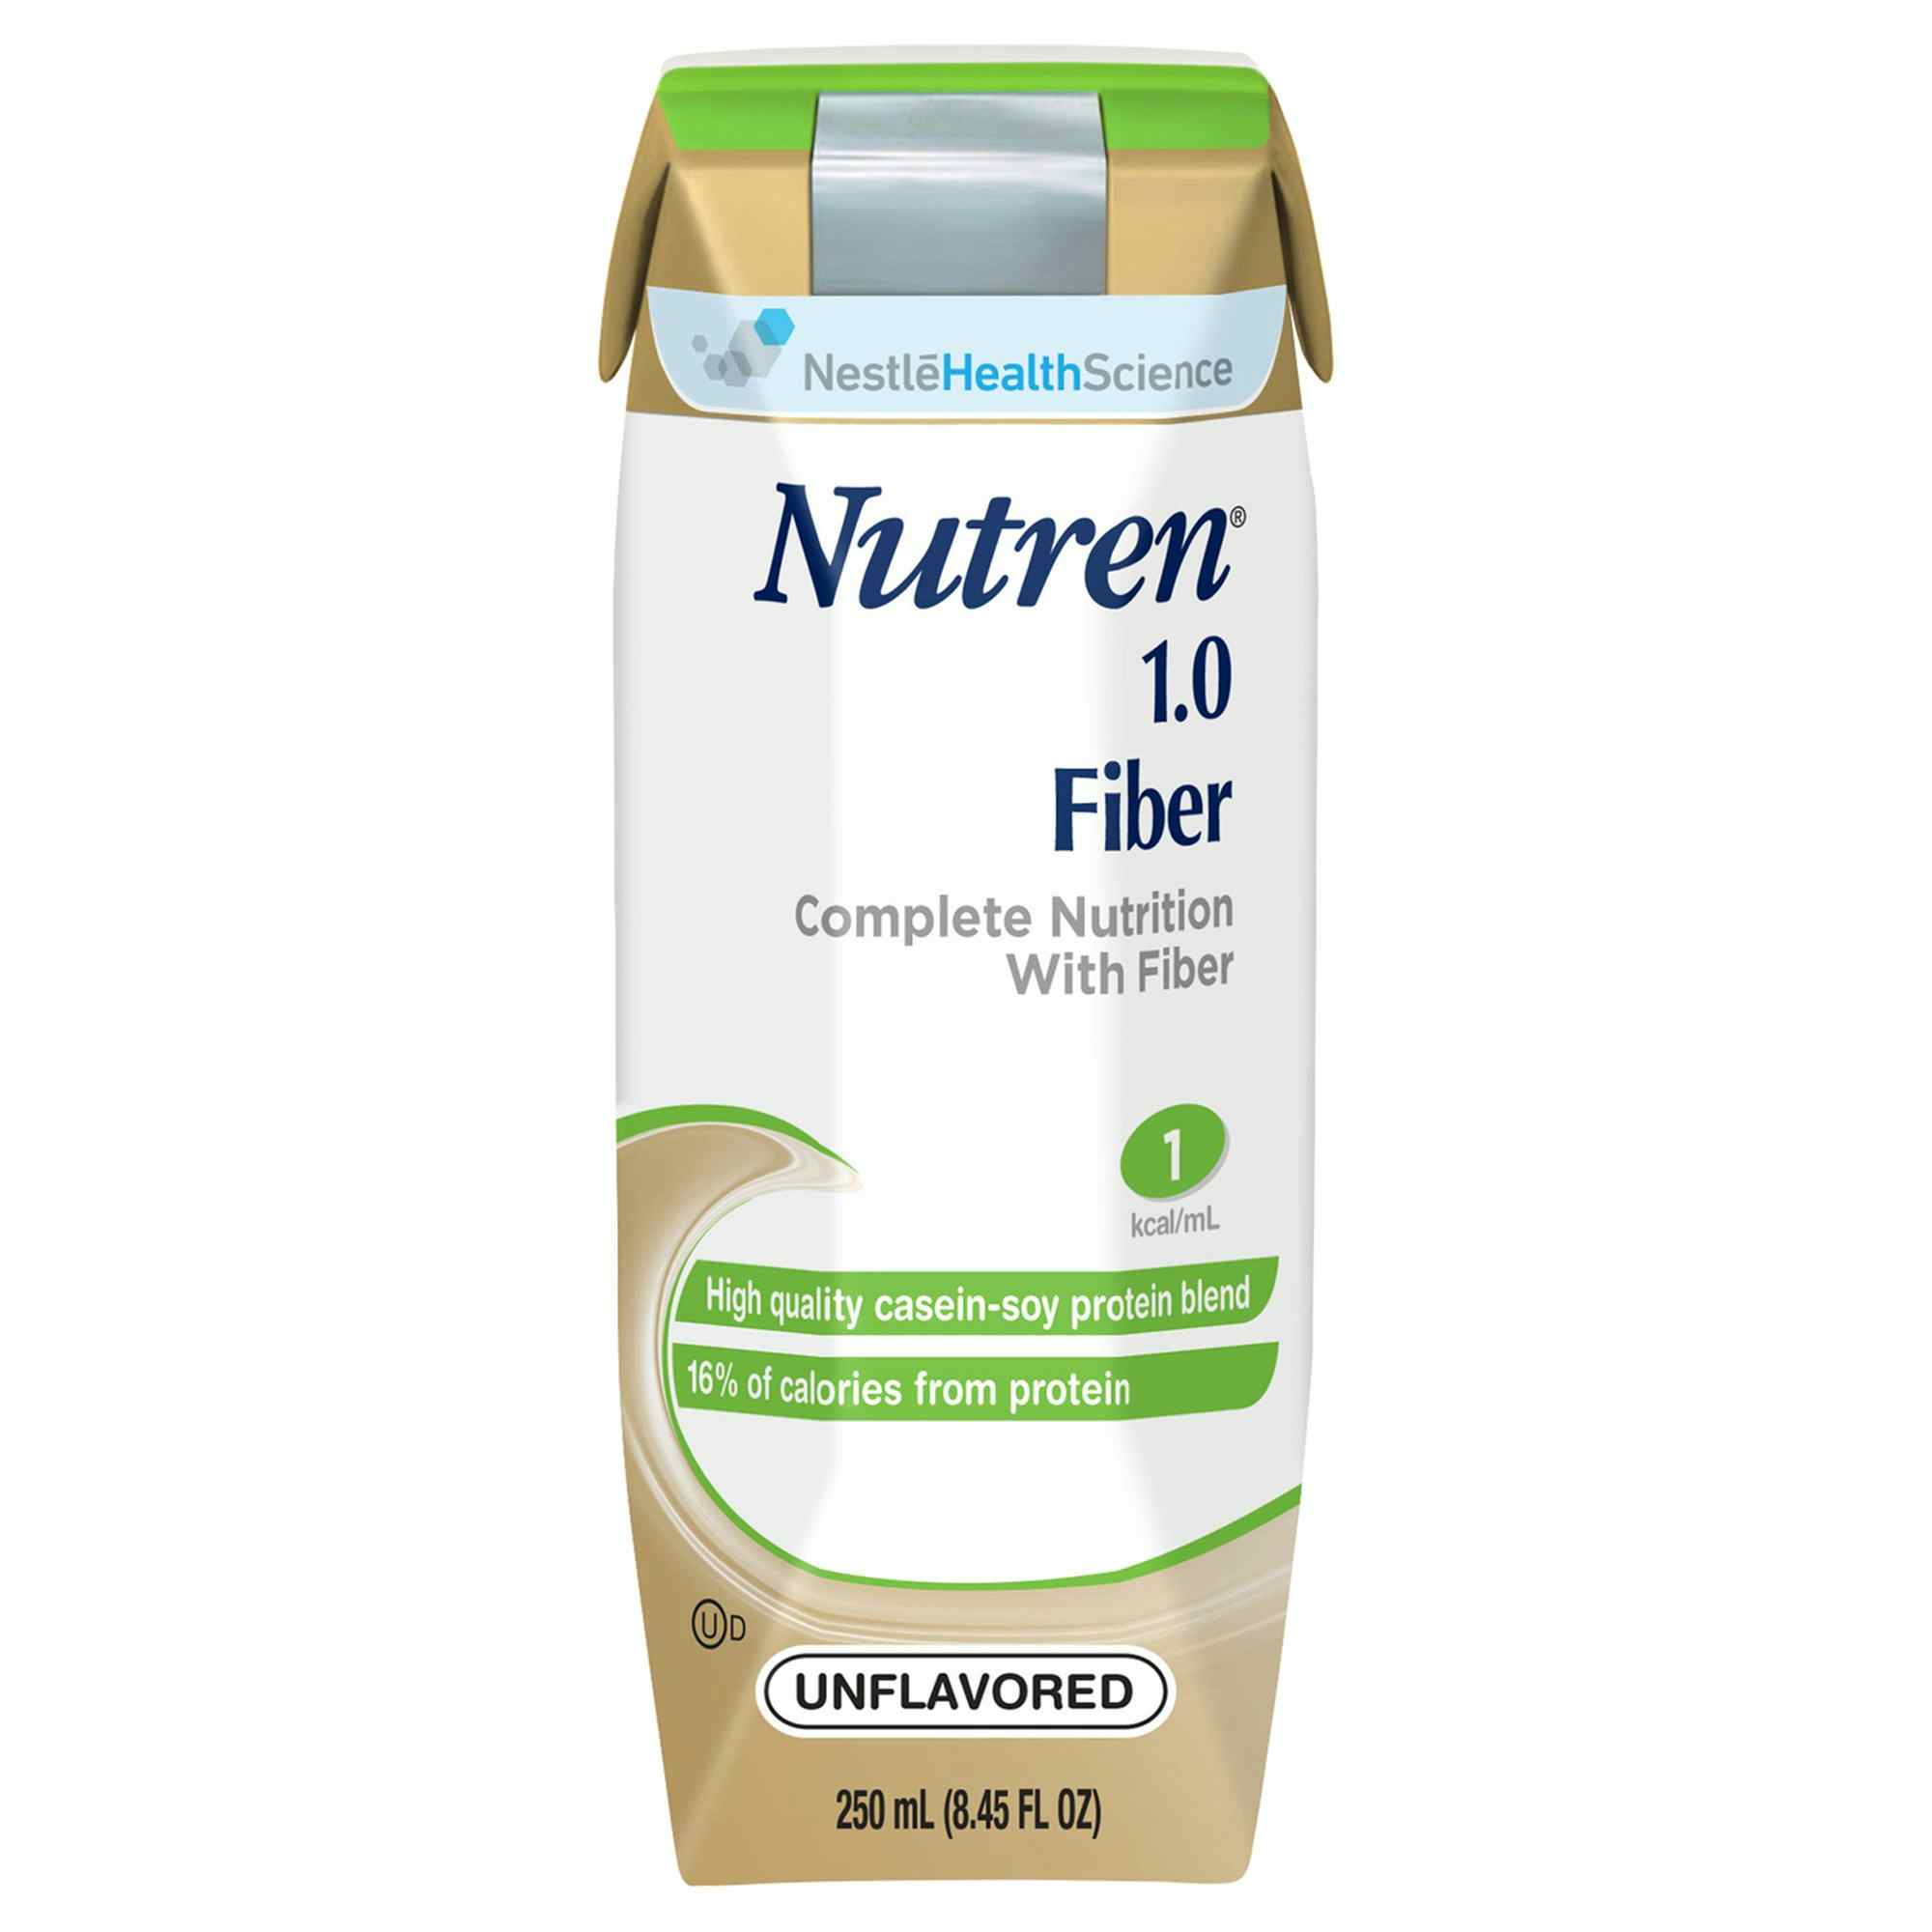 Nutren 1.0 Fiber Complete Nutrition Tube Feeding Formula, 8.45 oz.